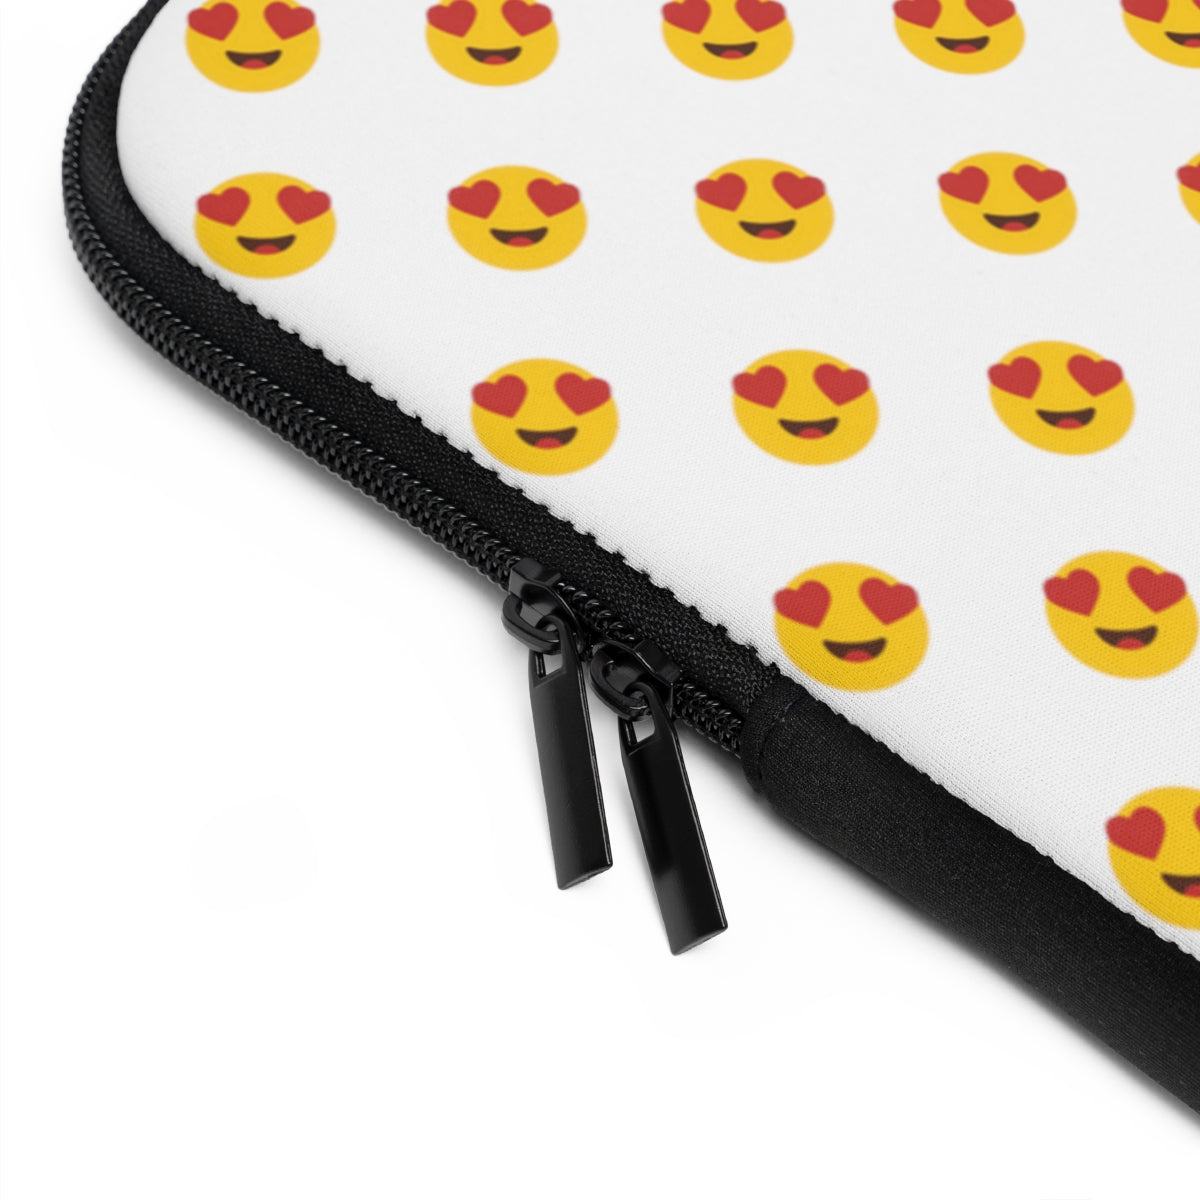 Getrott Emoji Smilling Face with Heart Eyes Laptop Sleeve